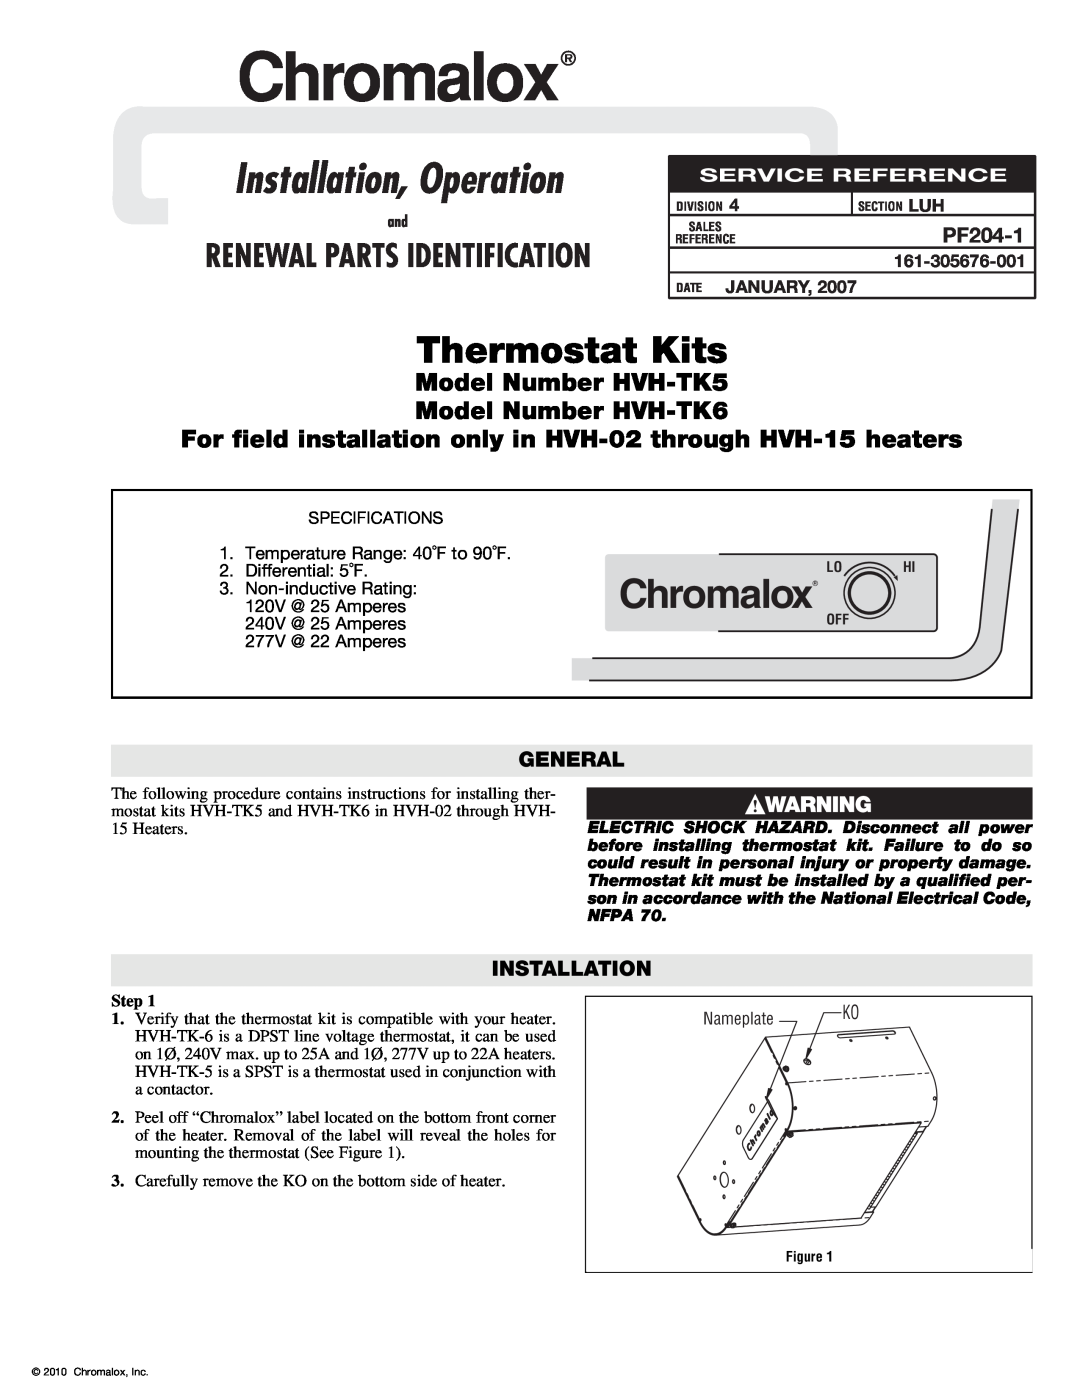 Chromalox HVH-TK5 specifications PF204-1, General, Step, Installation, Operation, ChromaloxR, Thermostat Kits 